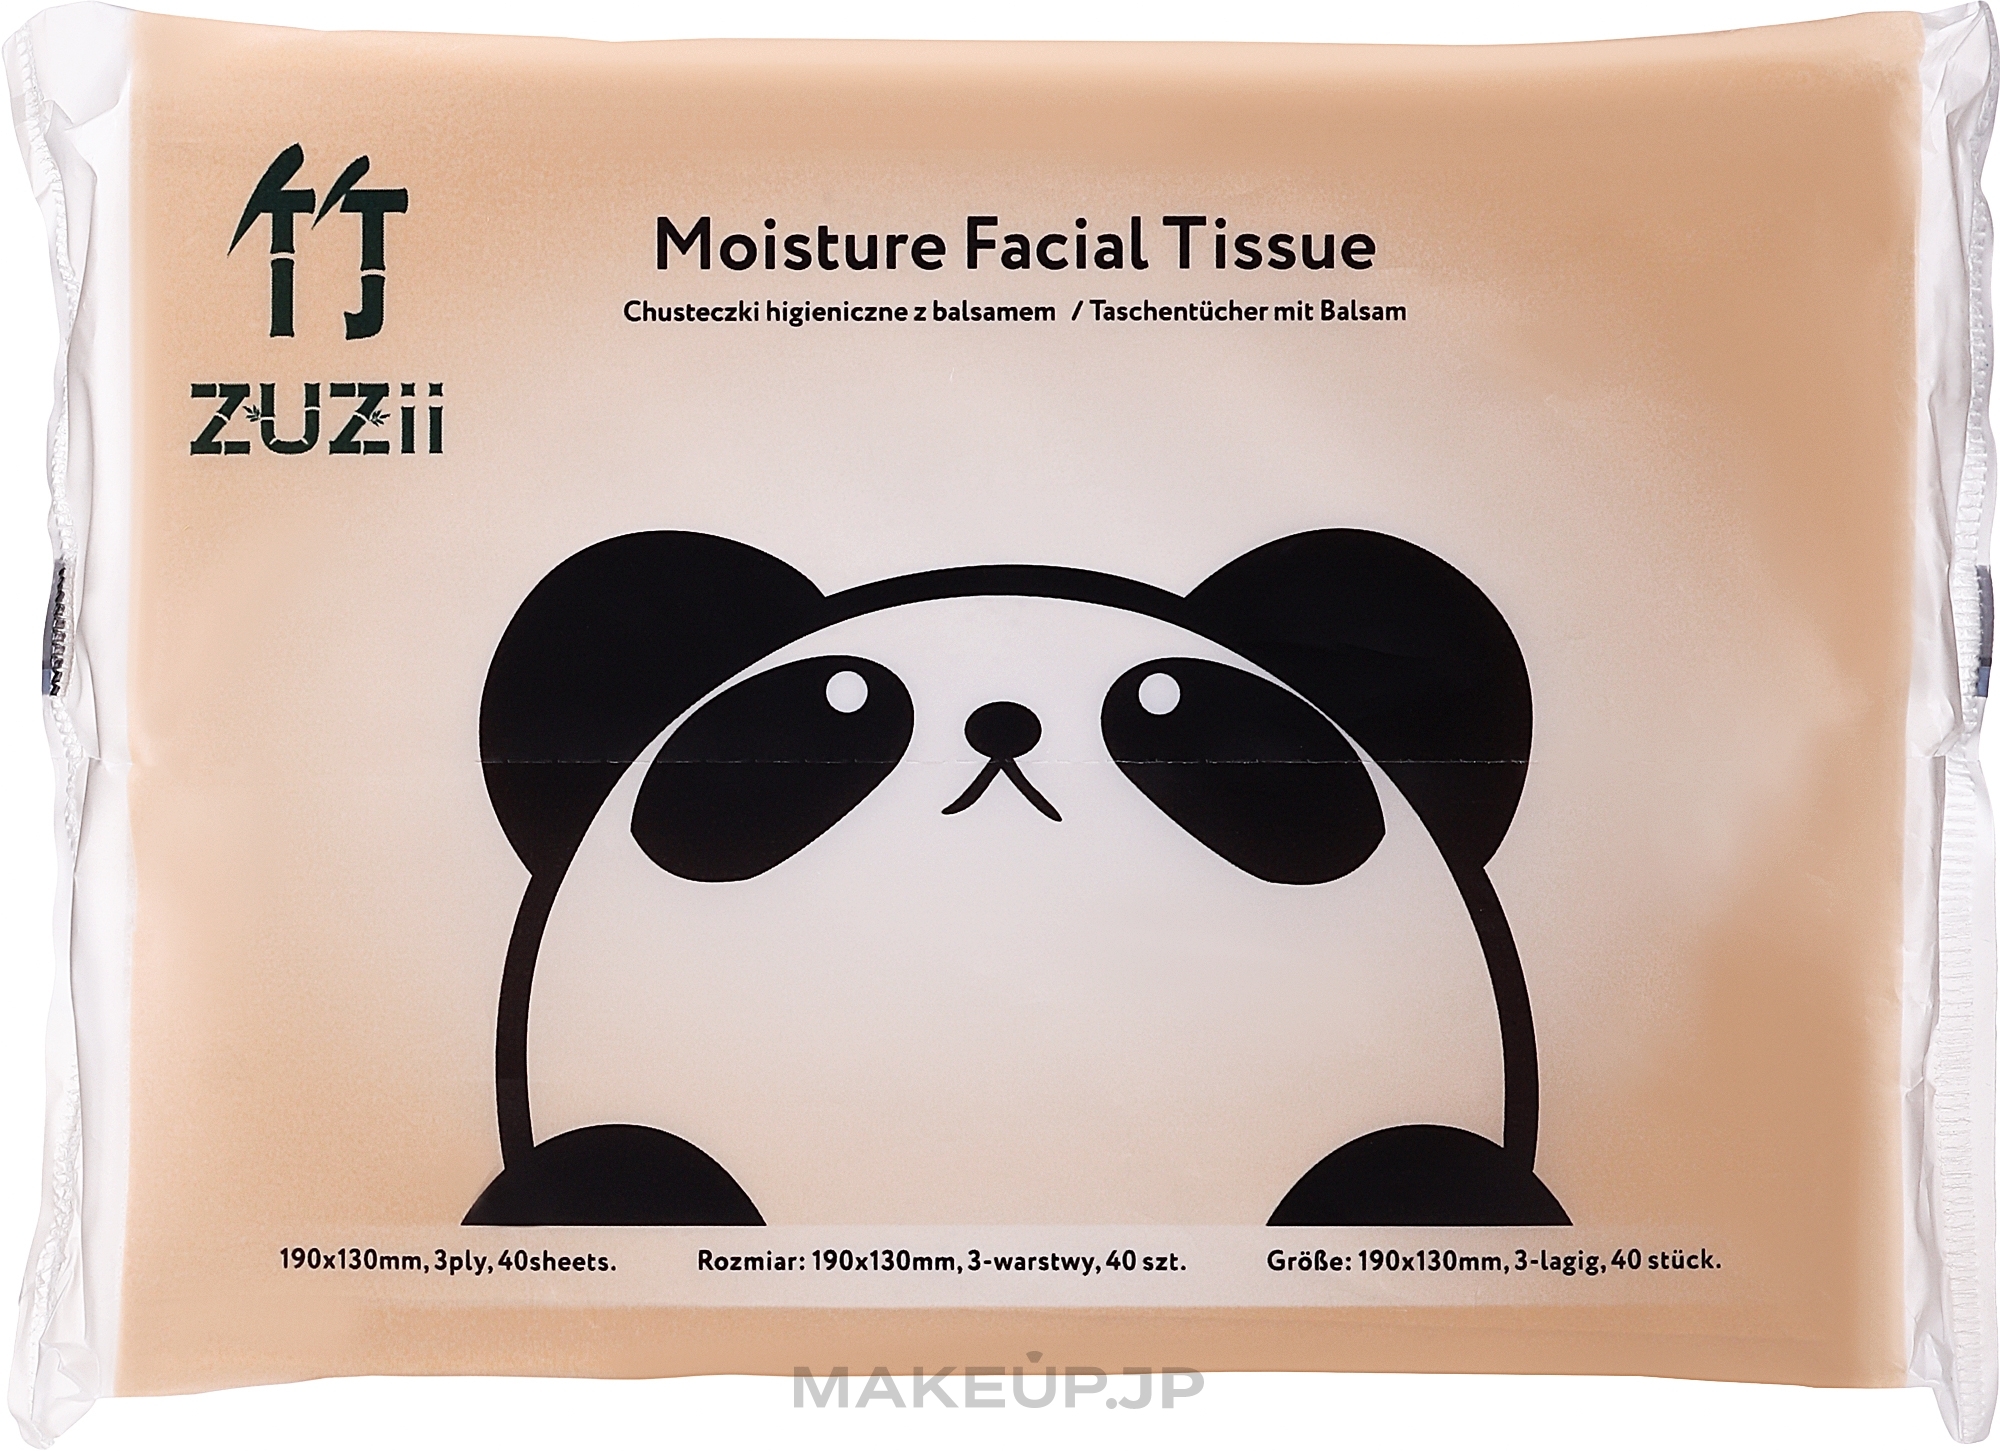 Bamboo Wet Wipes with Balm - Zuzii Moisture Facial Tissue — photo 40 szt.